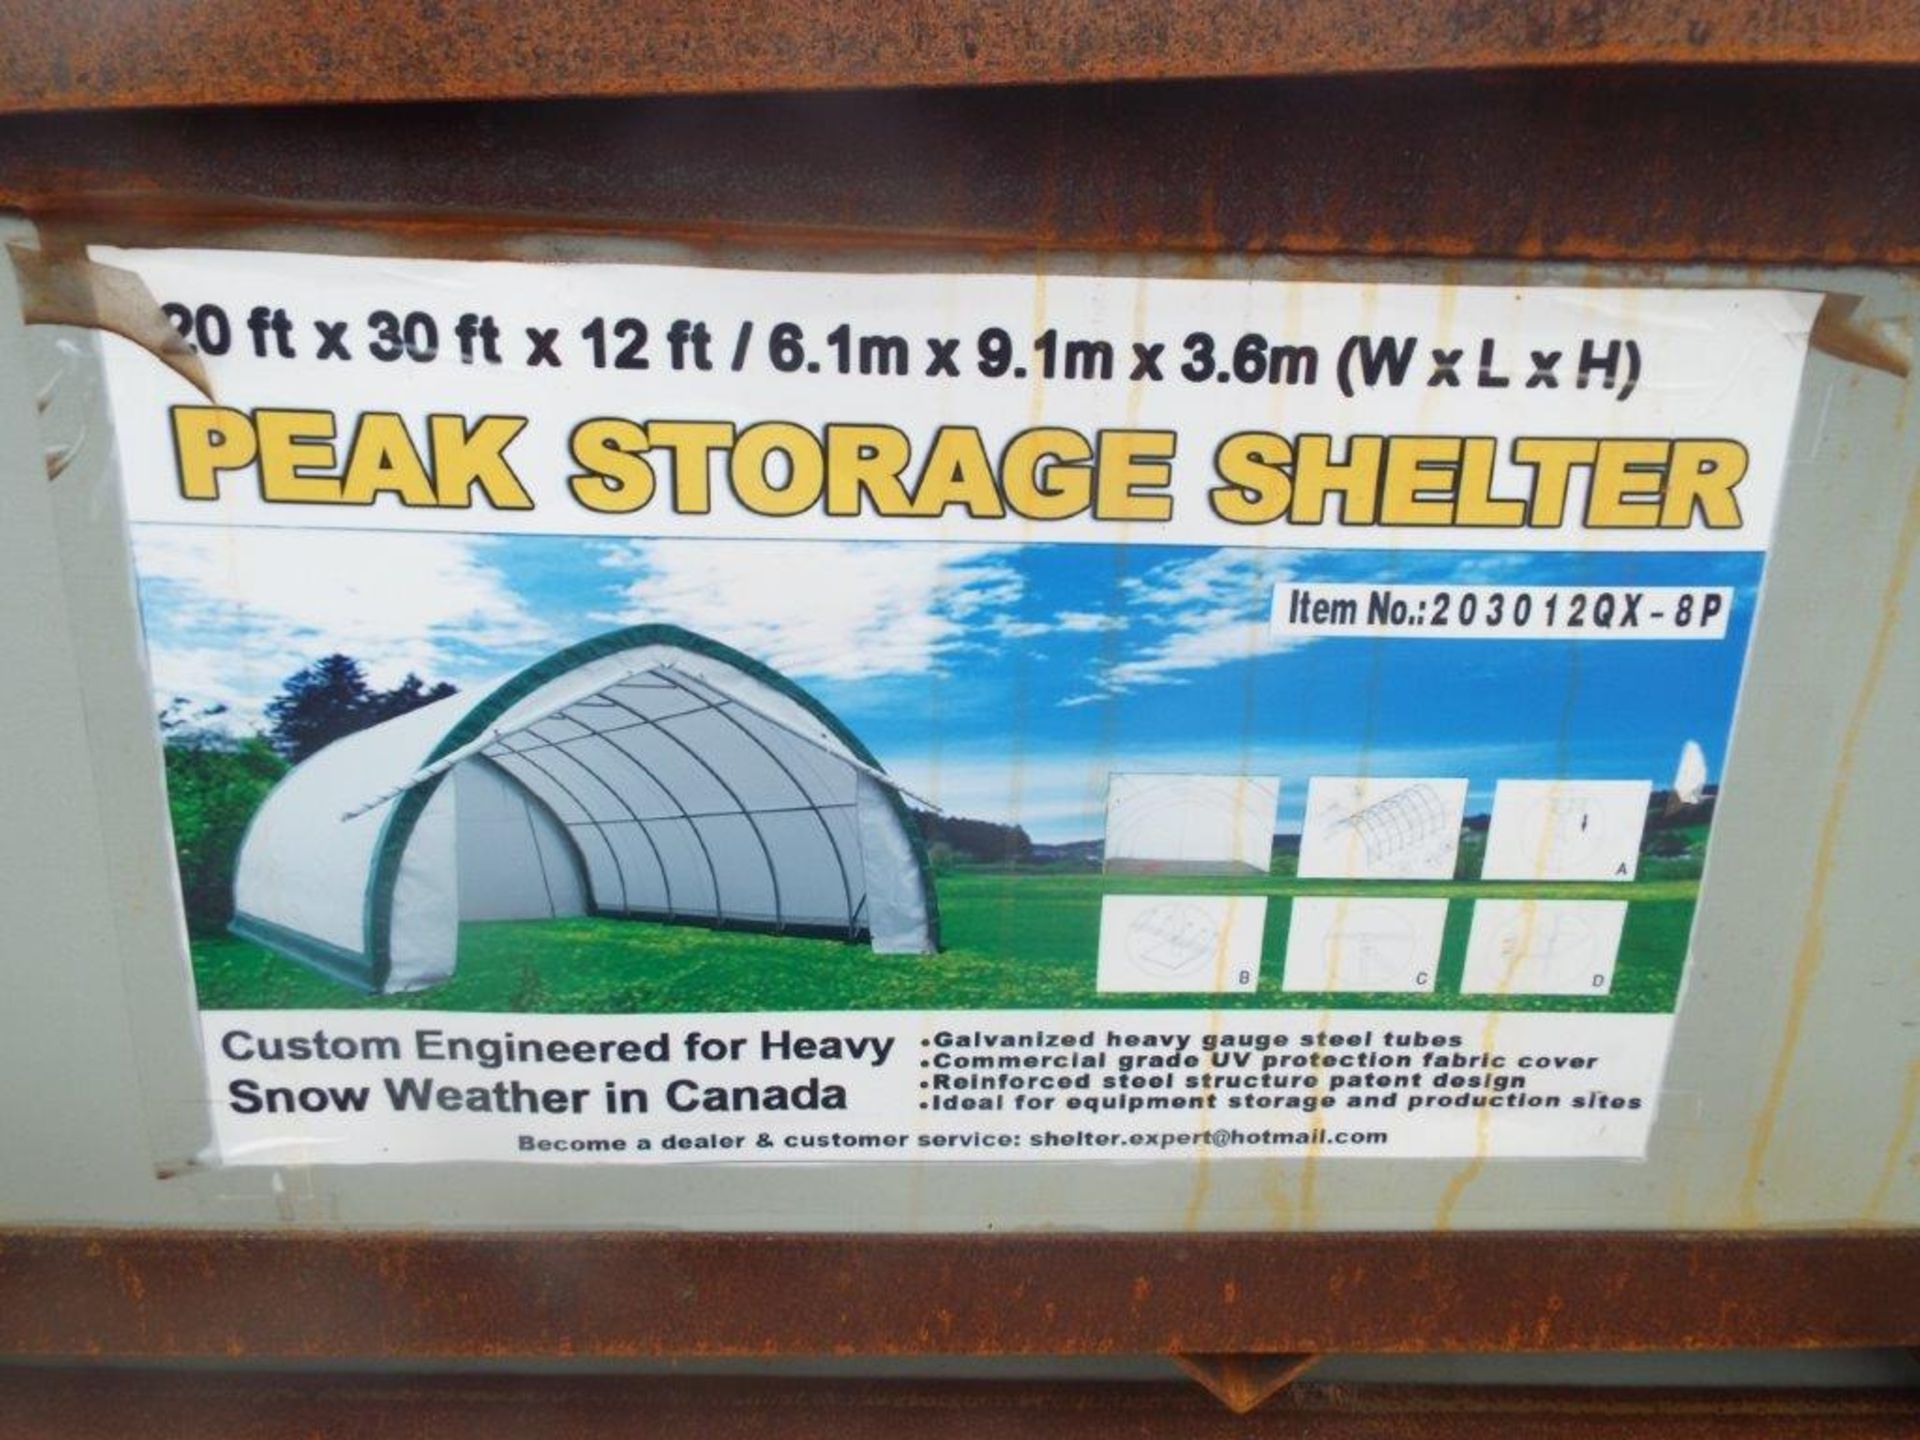 Heavy Duty Peak Storage Shelter 20'W x 30'L x 12' H P/No 203012QX-8P - Image 2 of 4